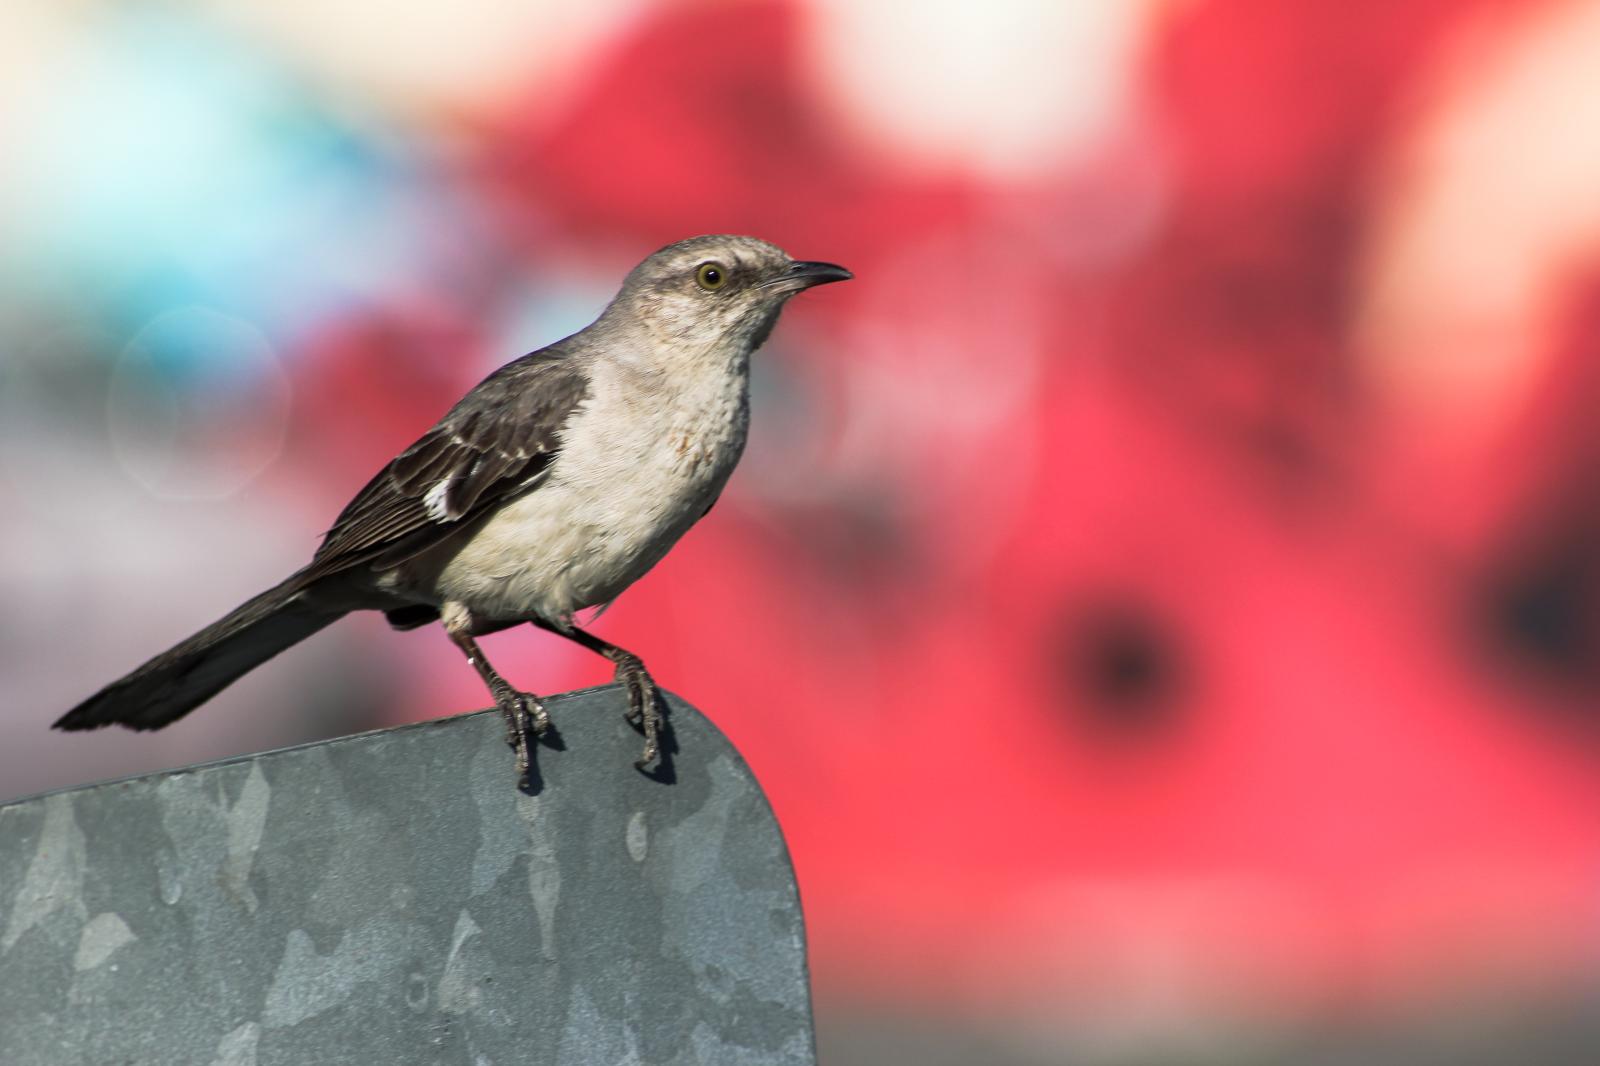 Bird Against Graffiti | Buy this image